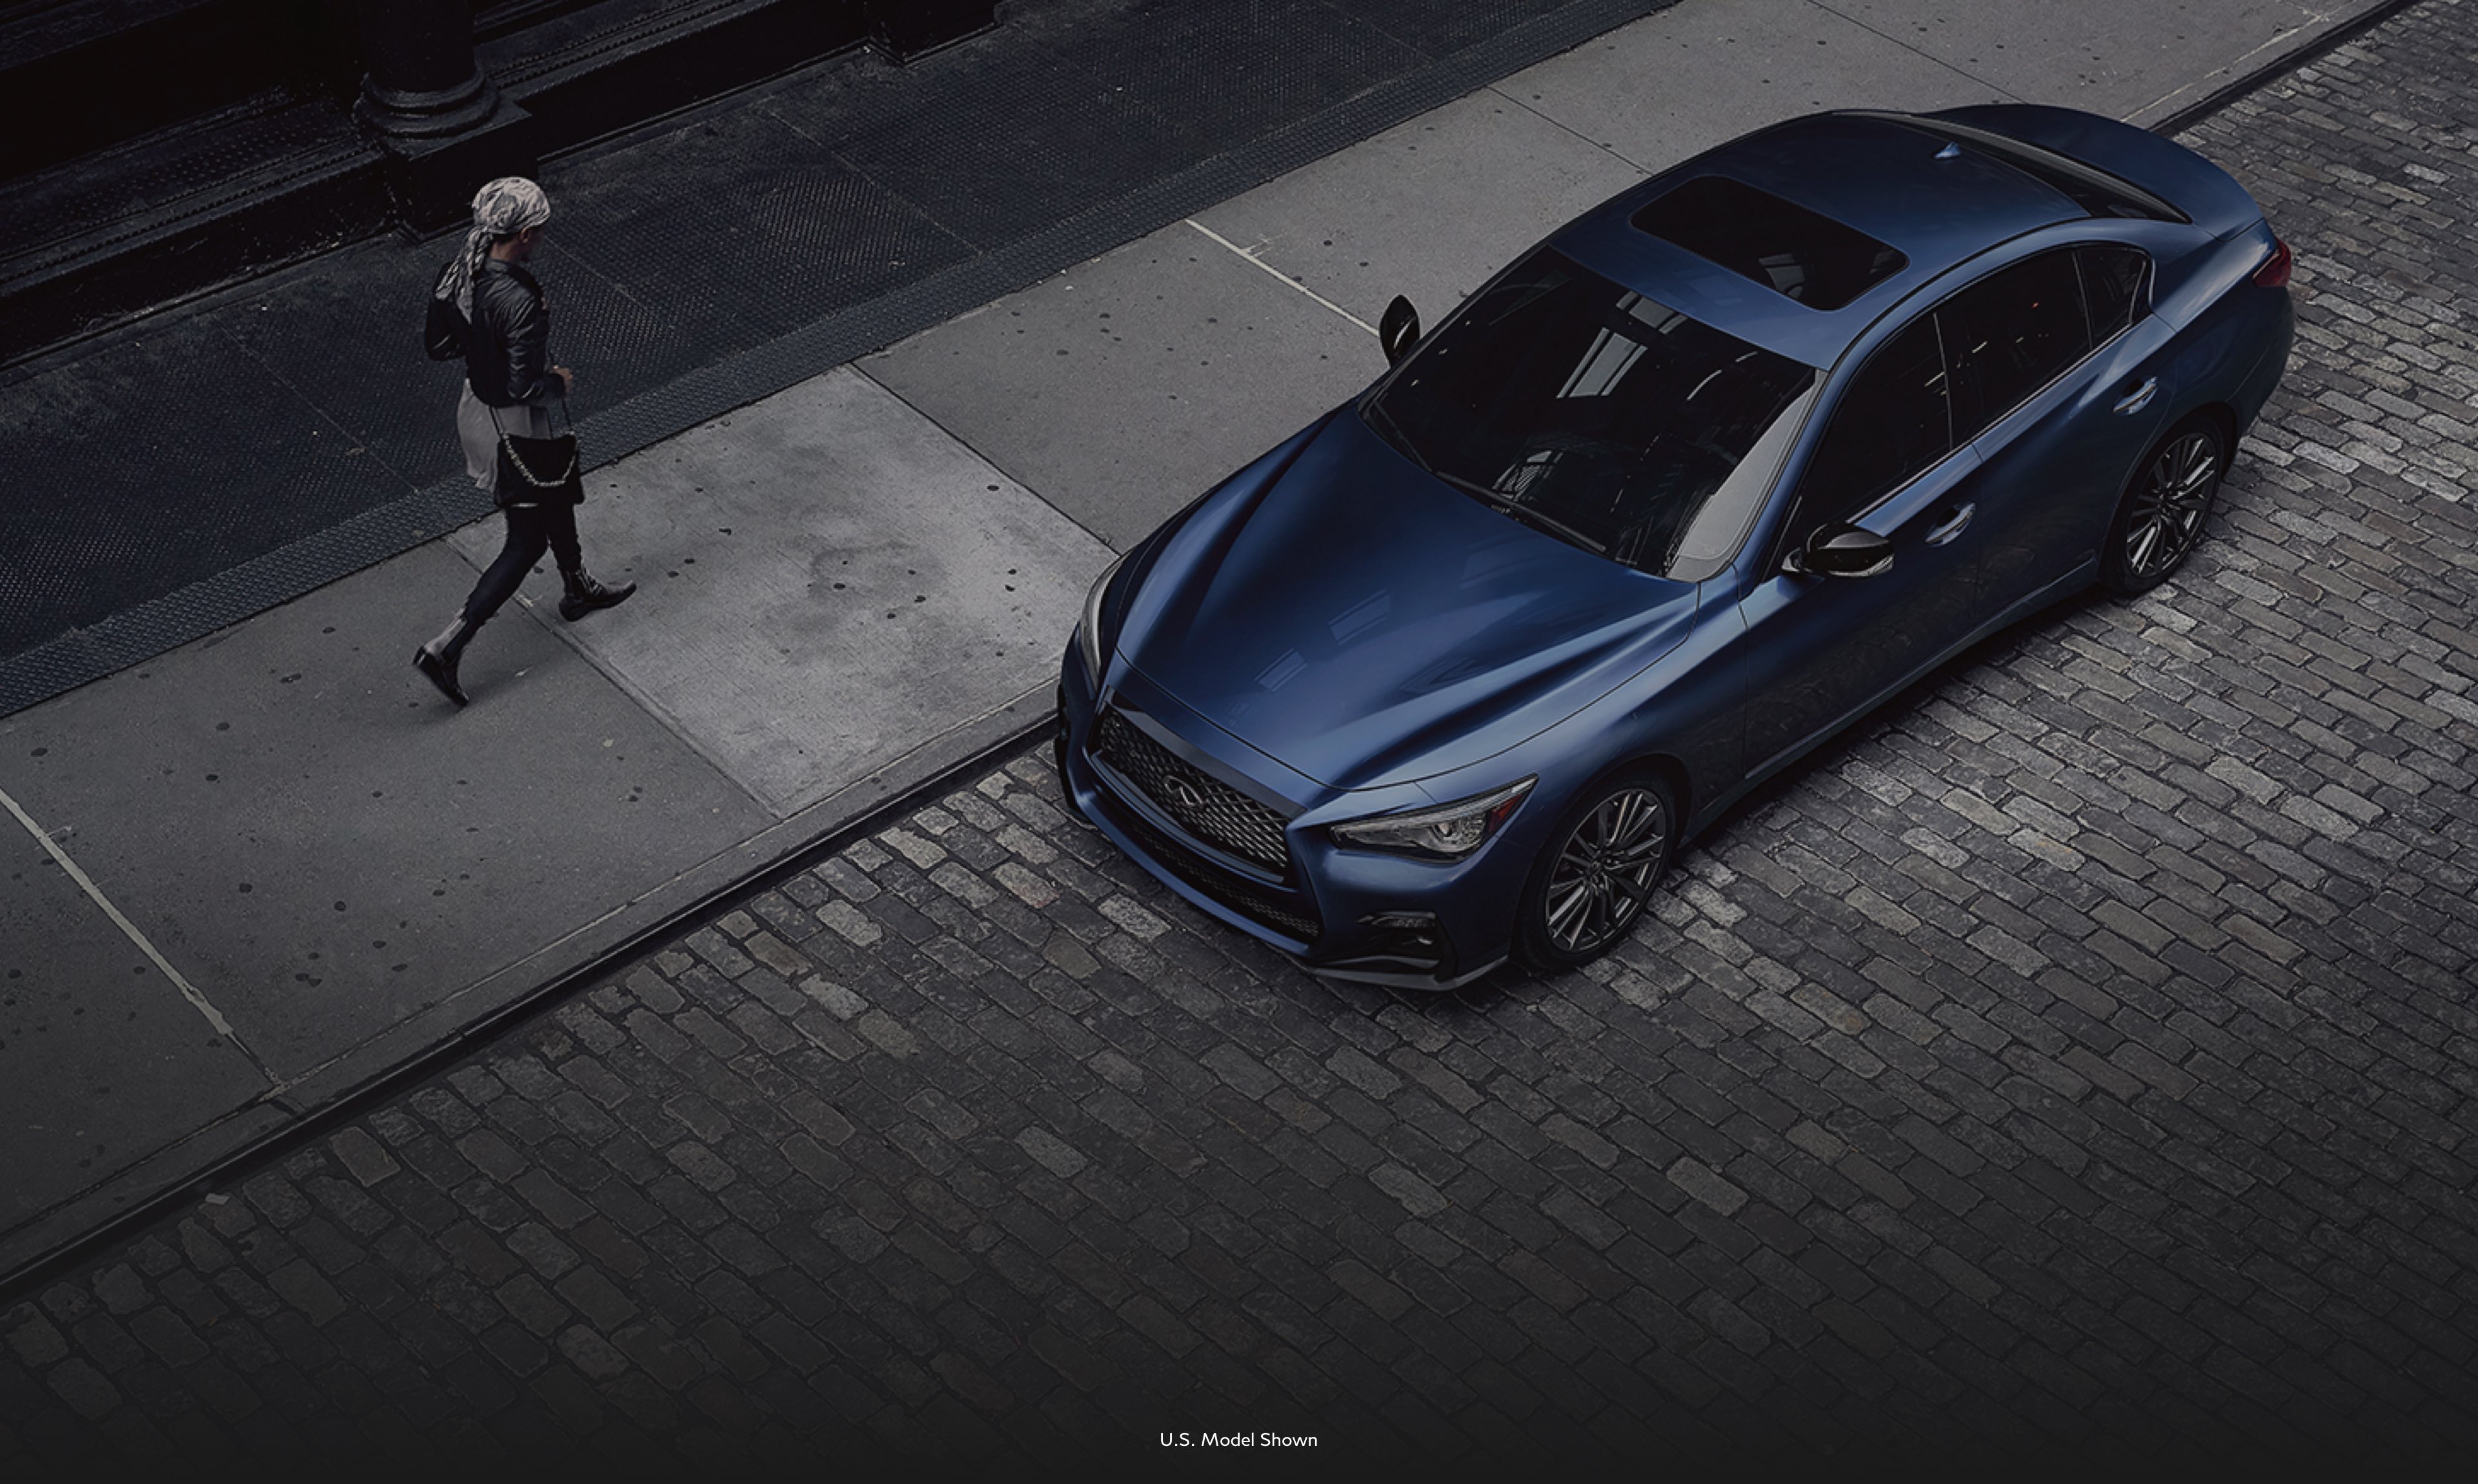 2022 INFINITI Q50 Luxury Sedan parked on street. U.S. model shown, Model may not be exactly as shown